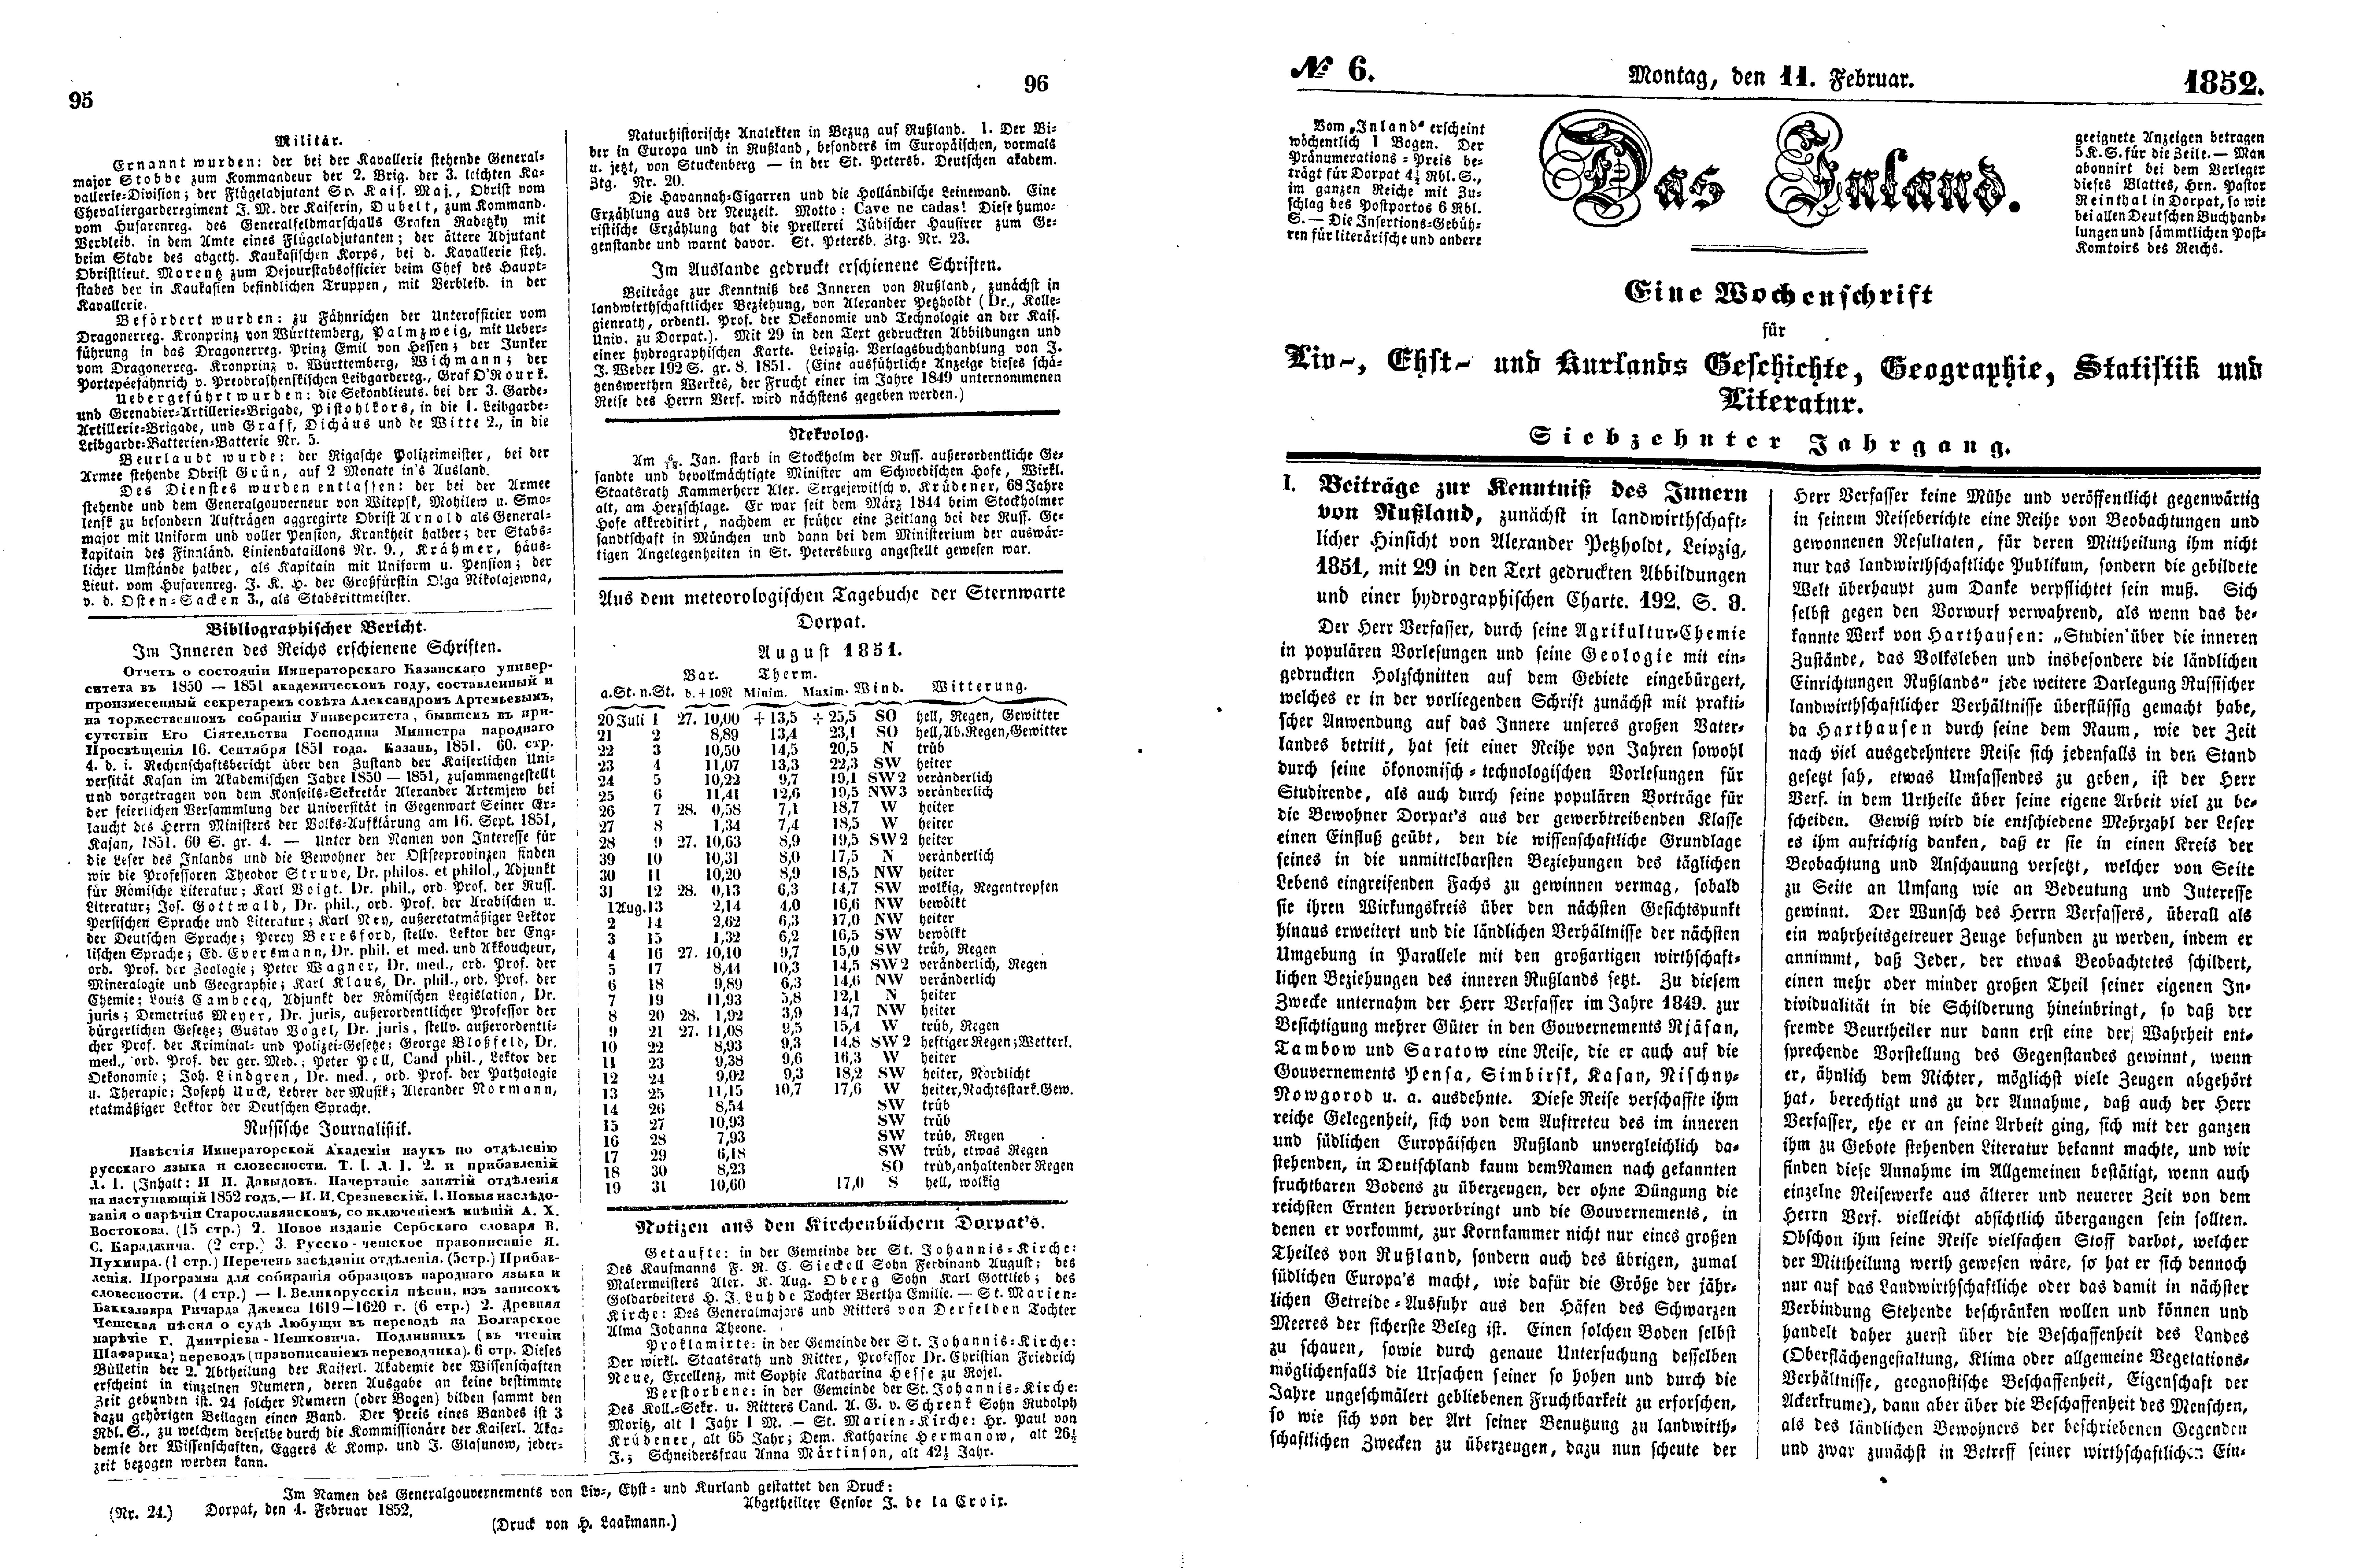 Das Inland [17] (1852) | 28. (95-98) Main body of text